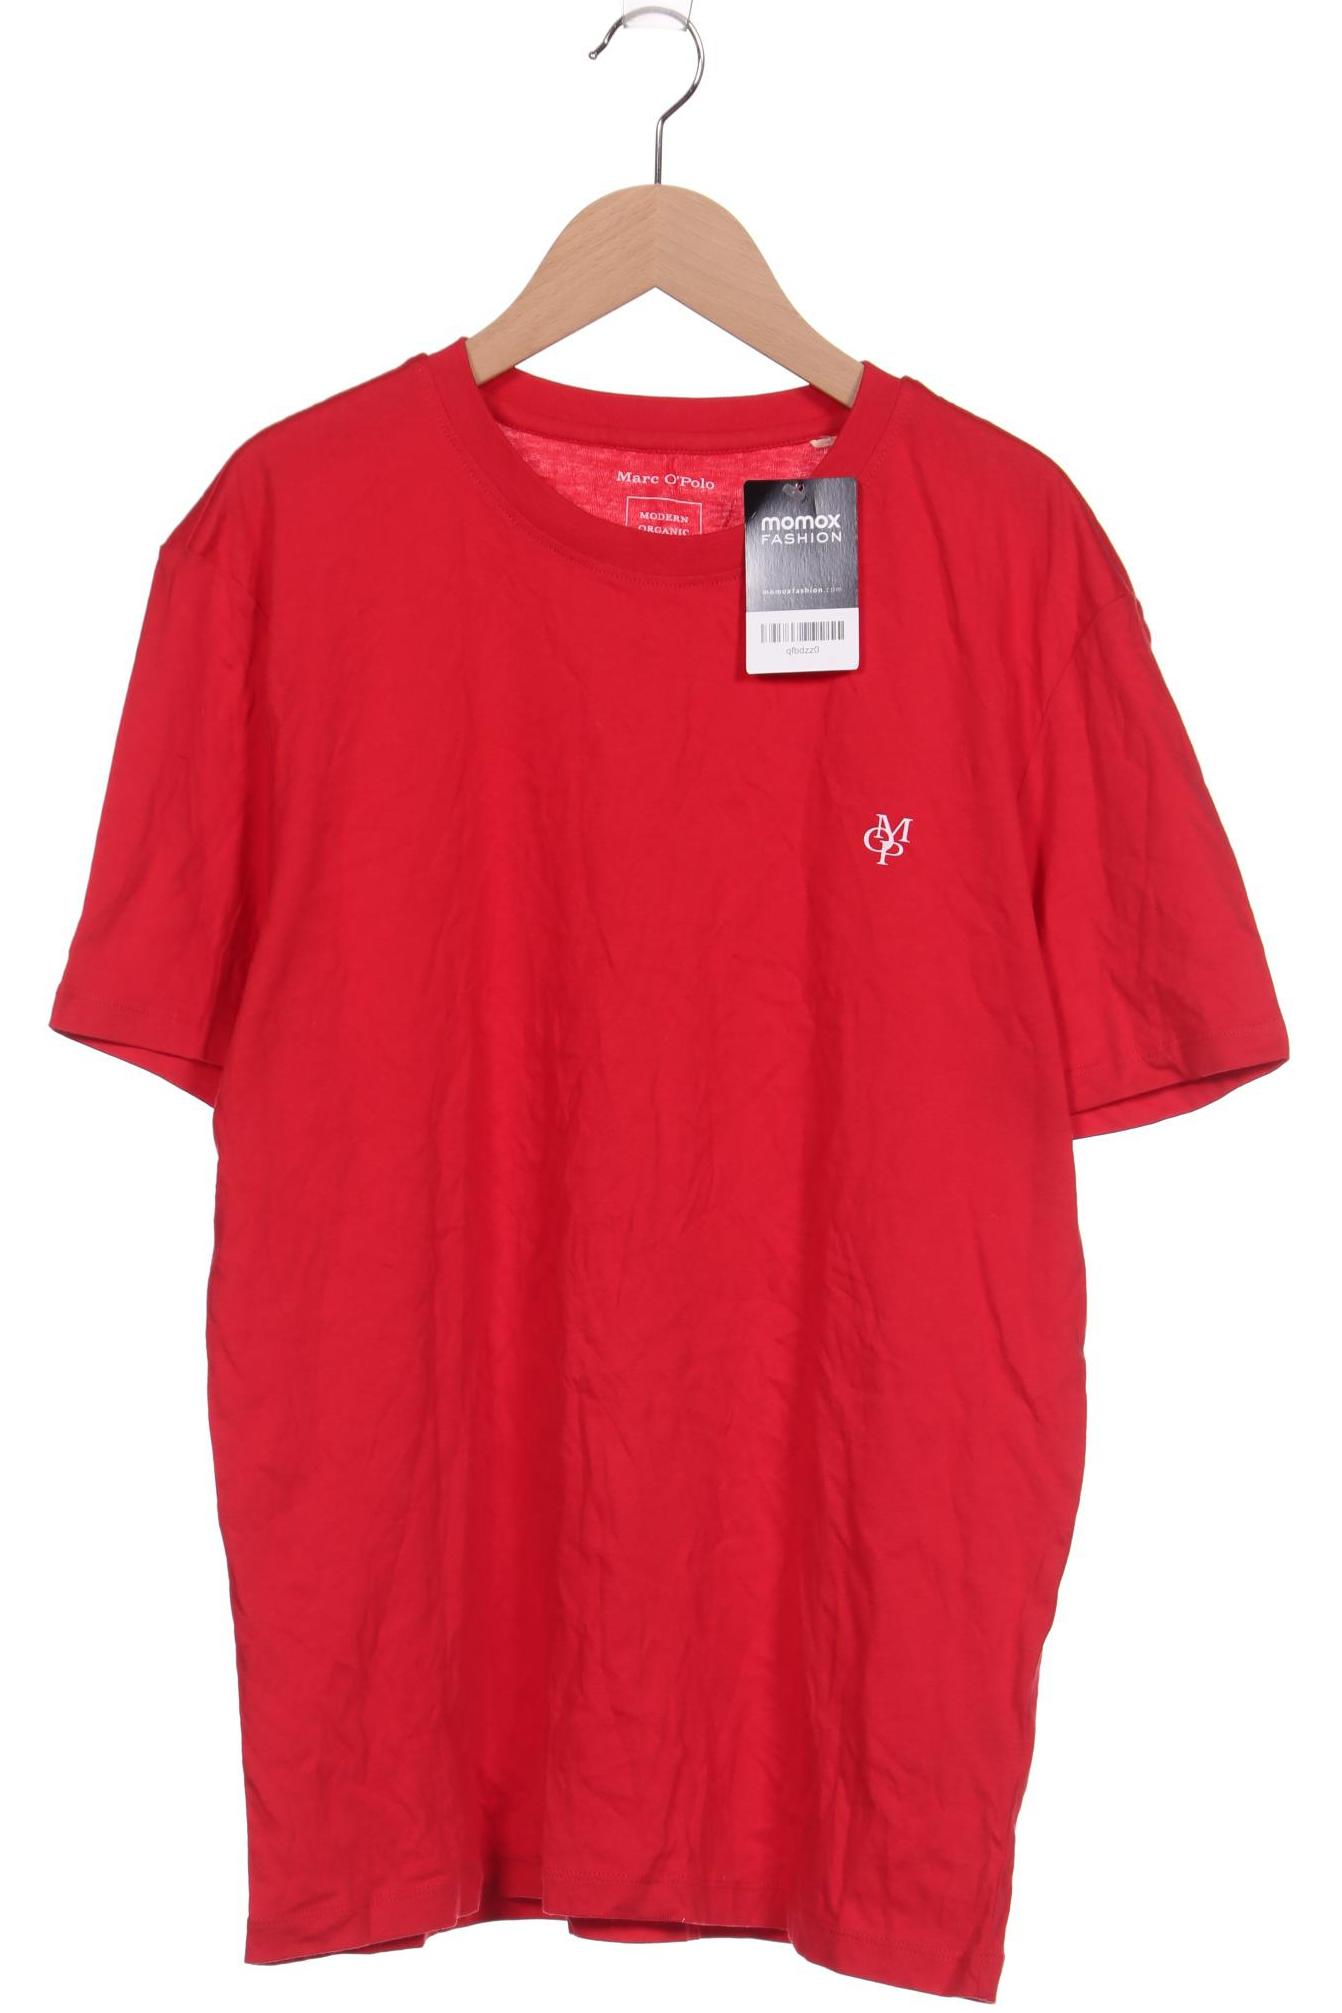 Marc O Polo Herren T-Shirt, rot von Marc O Polo